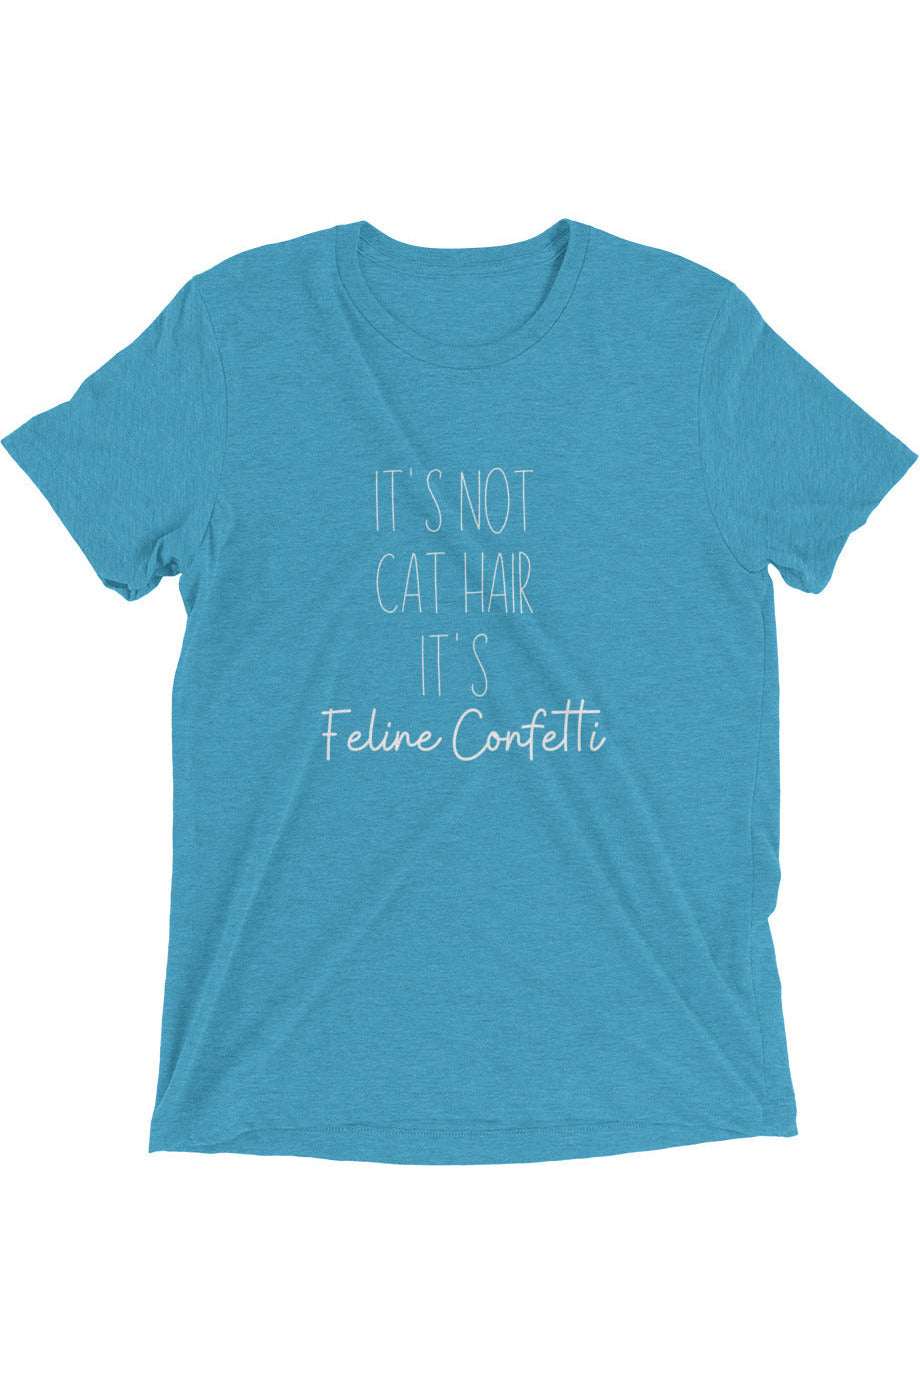 "Feline Confetti" - Short sleeve t-shirt